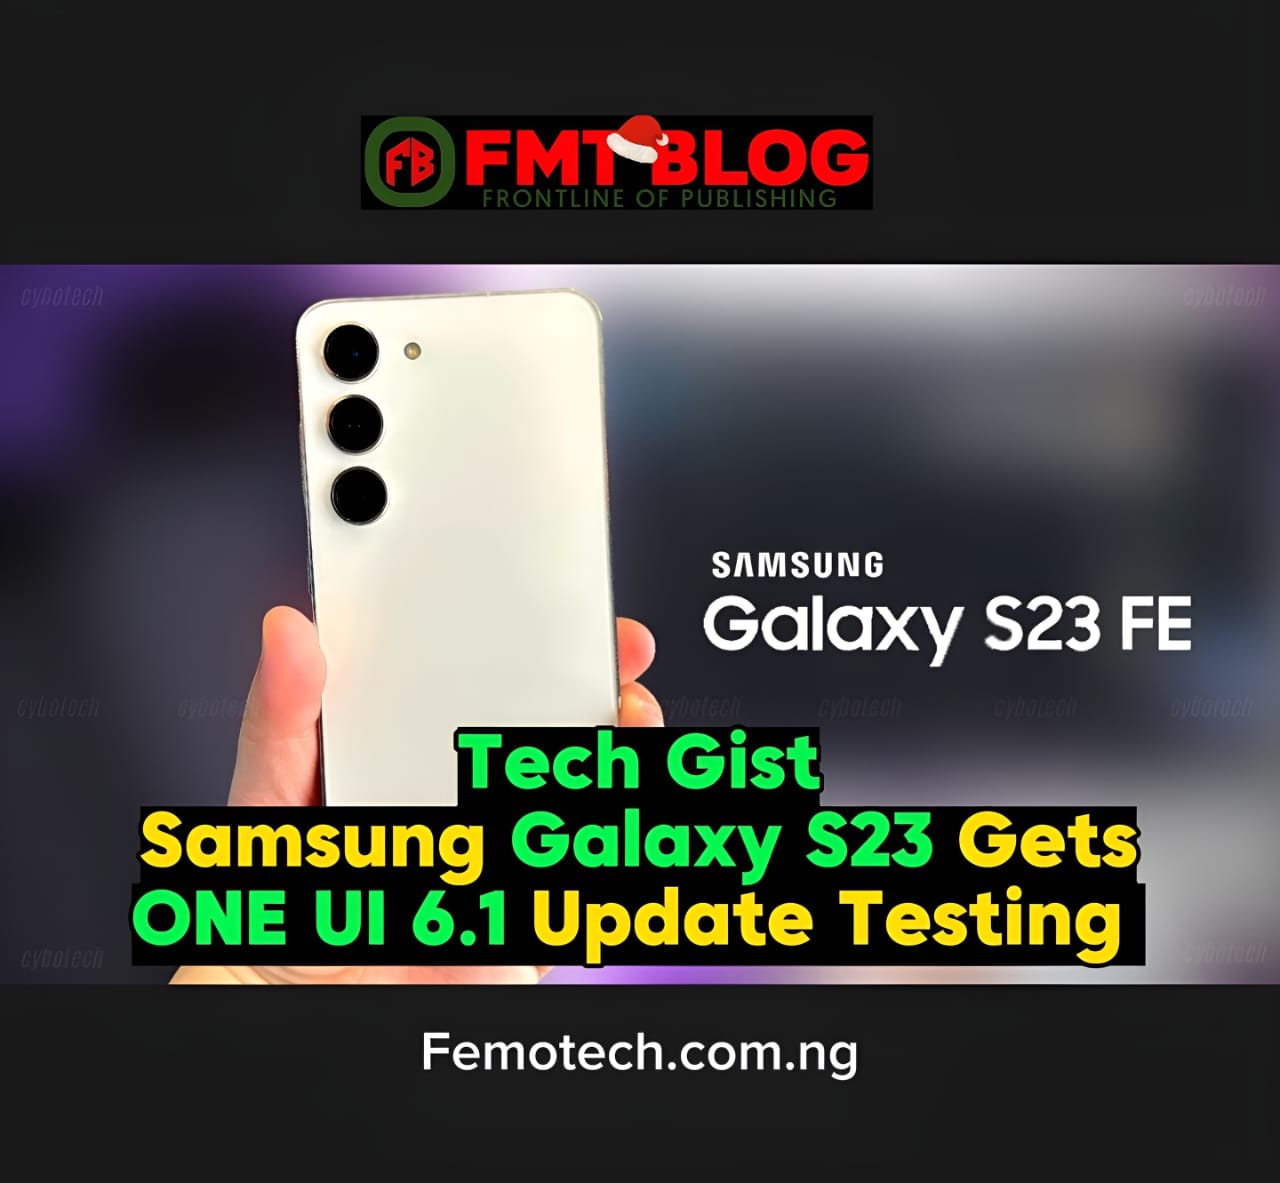 Samsung Galaxy S23 FE Gets ONE UI 6.1 Update Testing